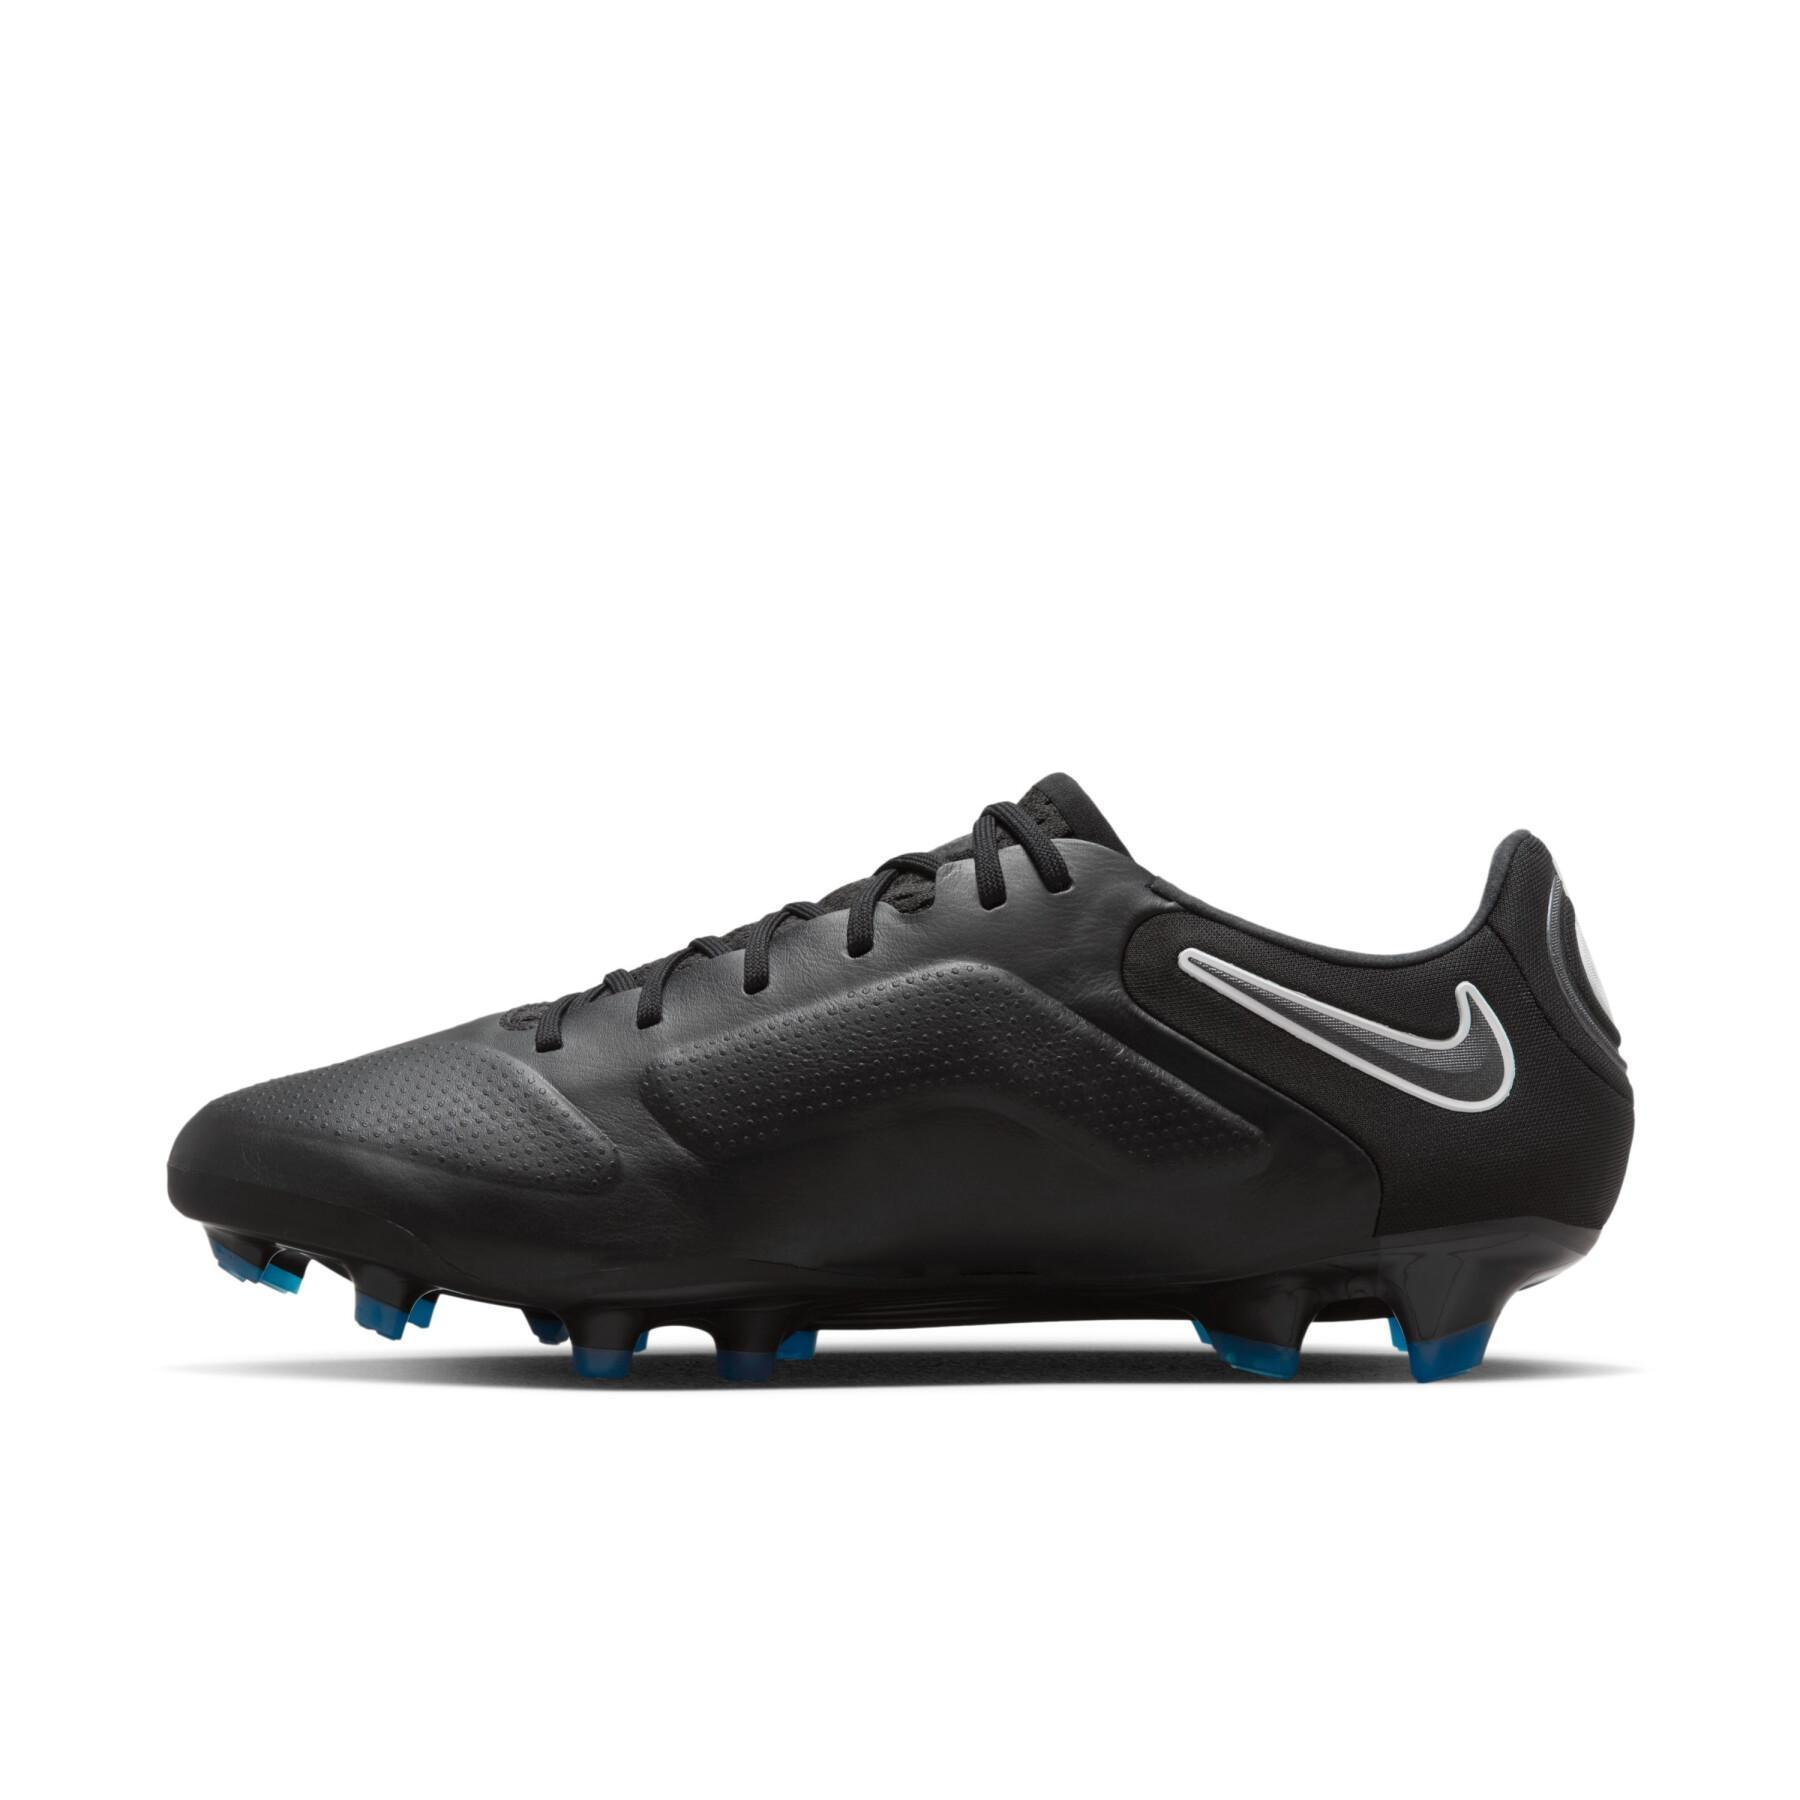 Soccer shoes Nike Tiempo Legend 9 Elite FG - Shadow Black Pack